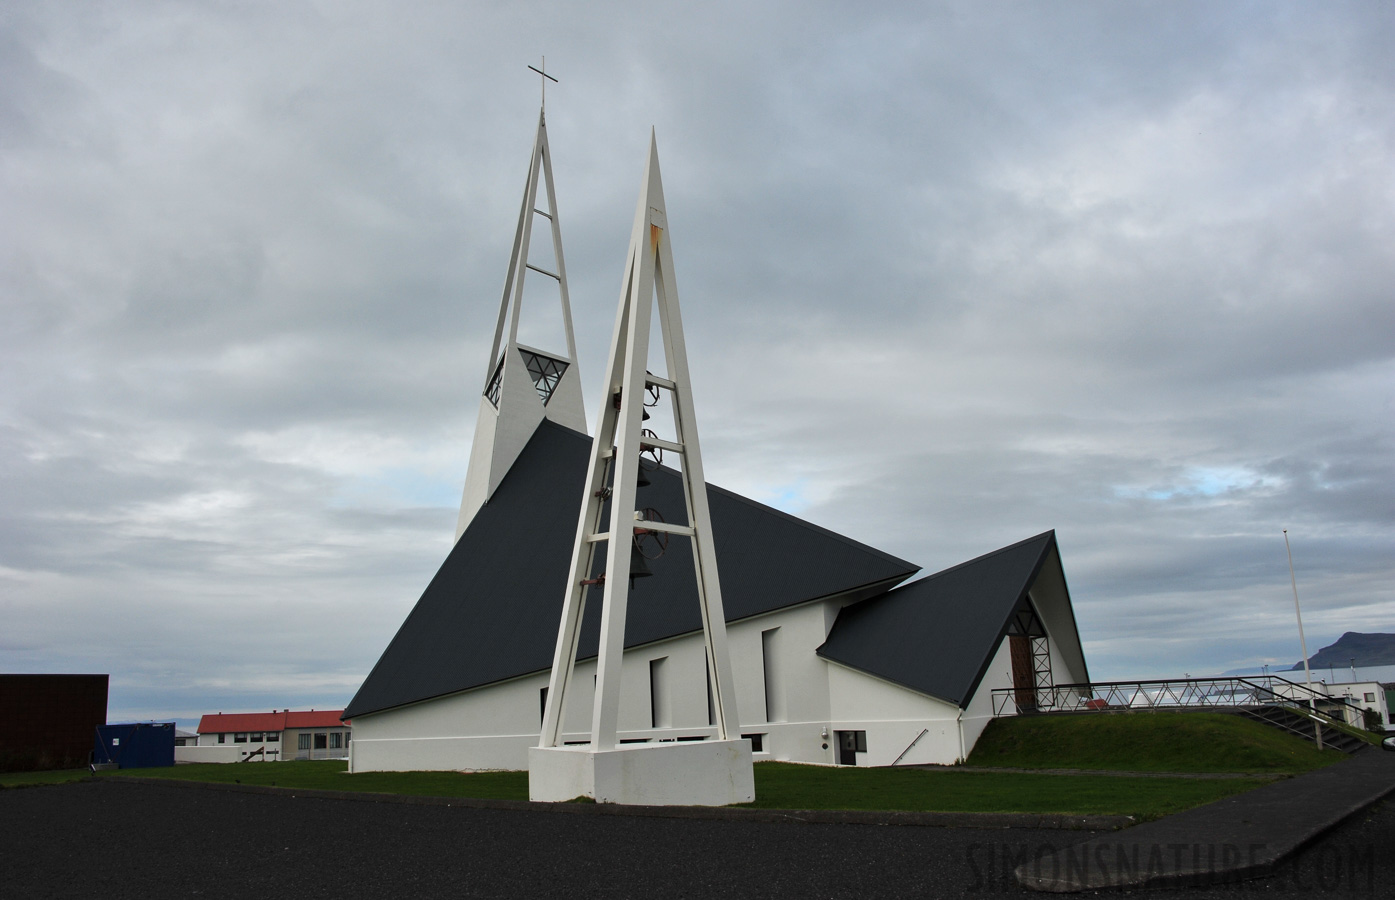 Modern Church [28 mm, 1/640 sec at f / 11, ISO 400]